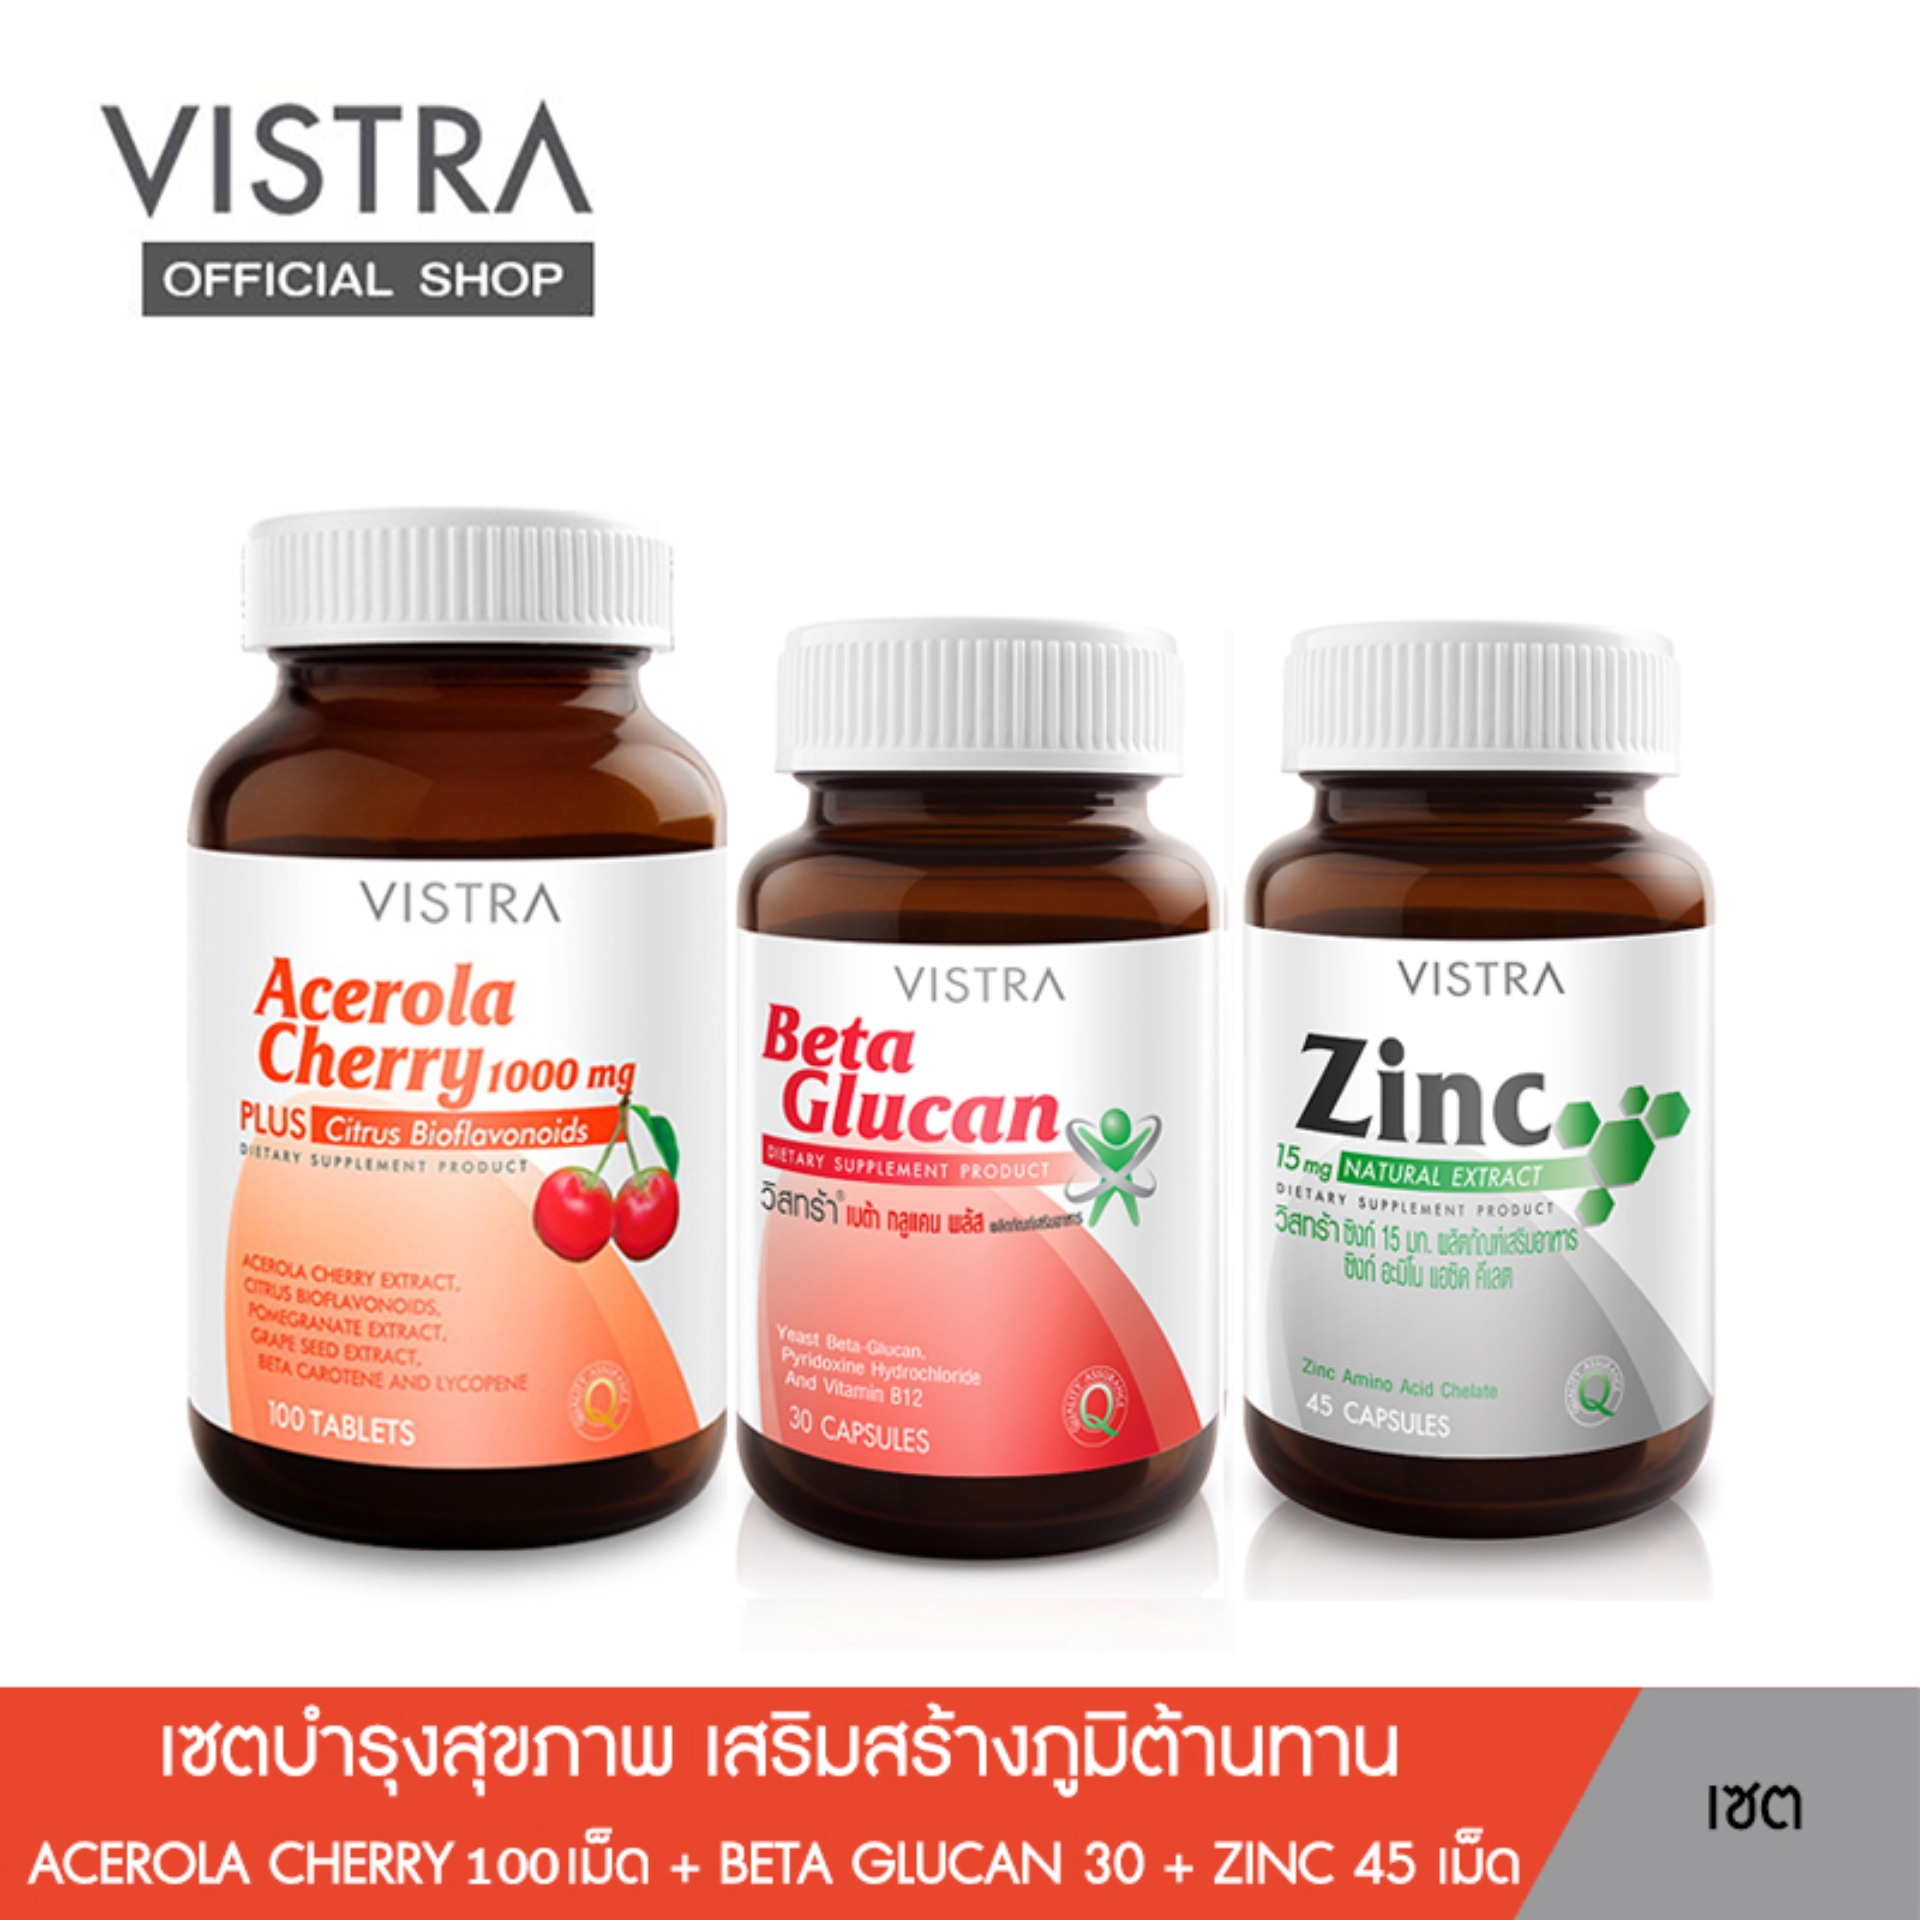 Vistra Acerola Cherry + Vistra Zinc + Vistra Beta Glucan - เซตบำรุงสุขภาพ เสริมเกราะป้องกันไข้หวัด อะเซโรลา เชอร์รี่ (100 เม็ด) + ซิงค์ (45 เม็ด) + เบต้า กลูแคน (30 เม็ด)